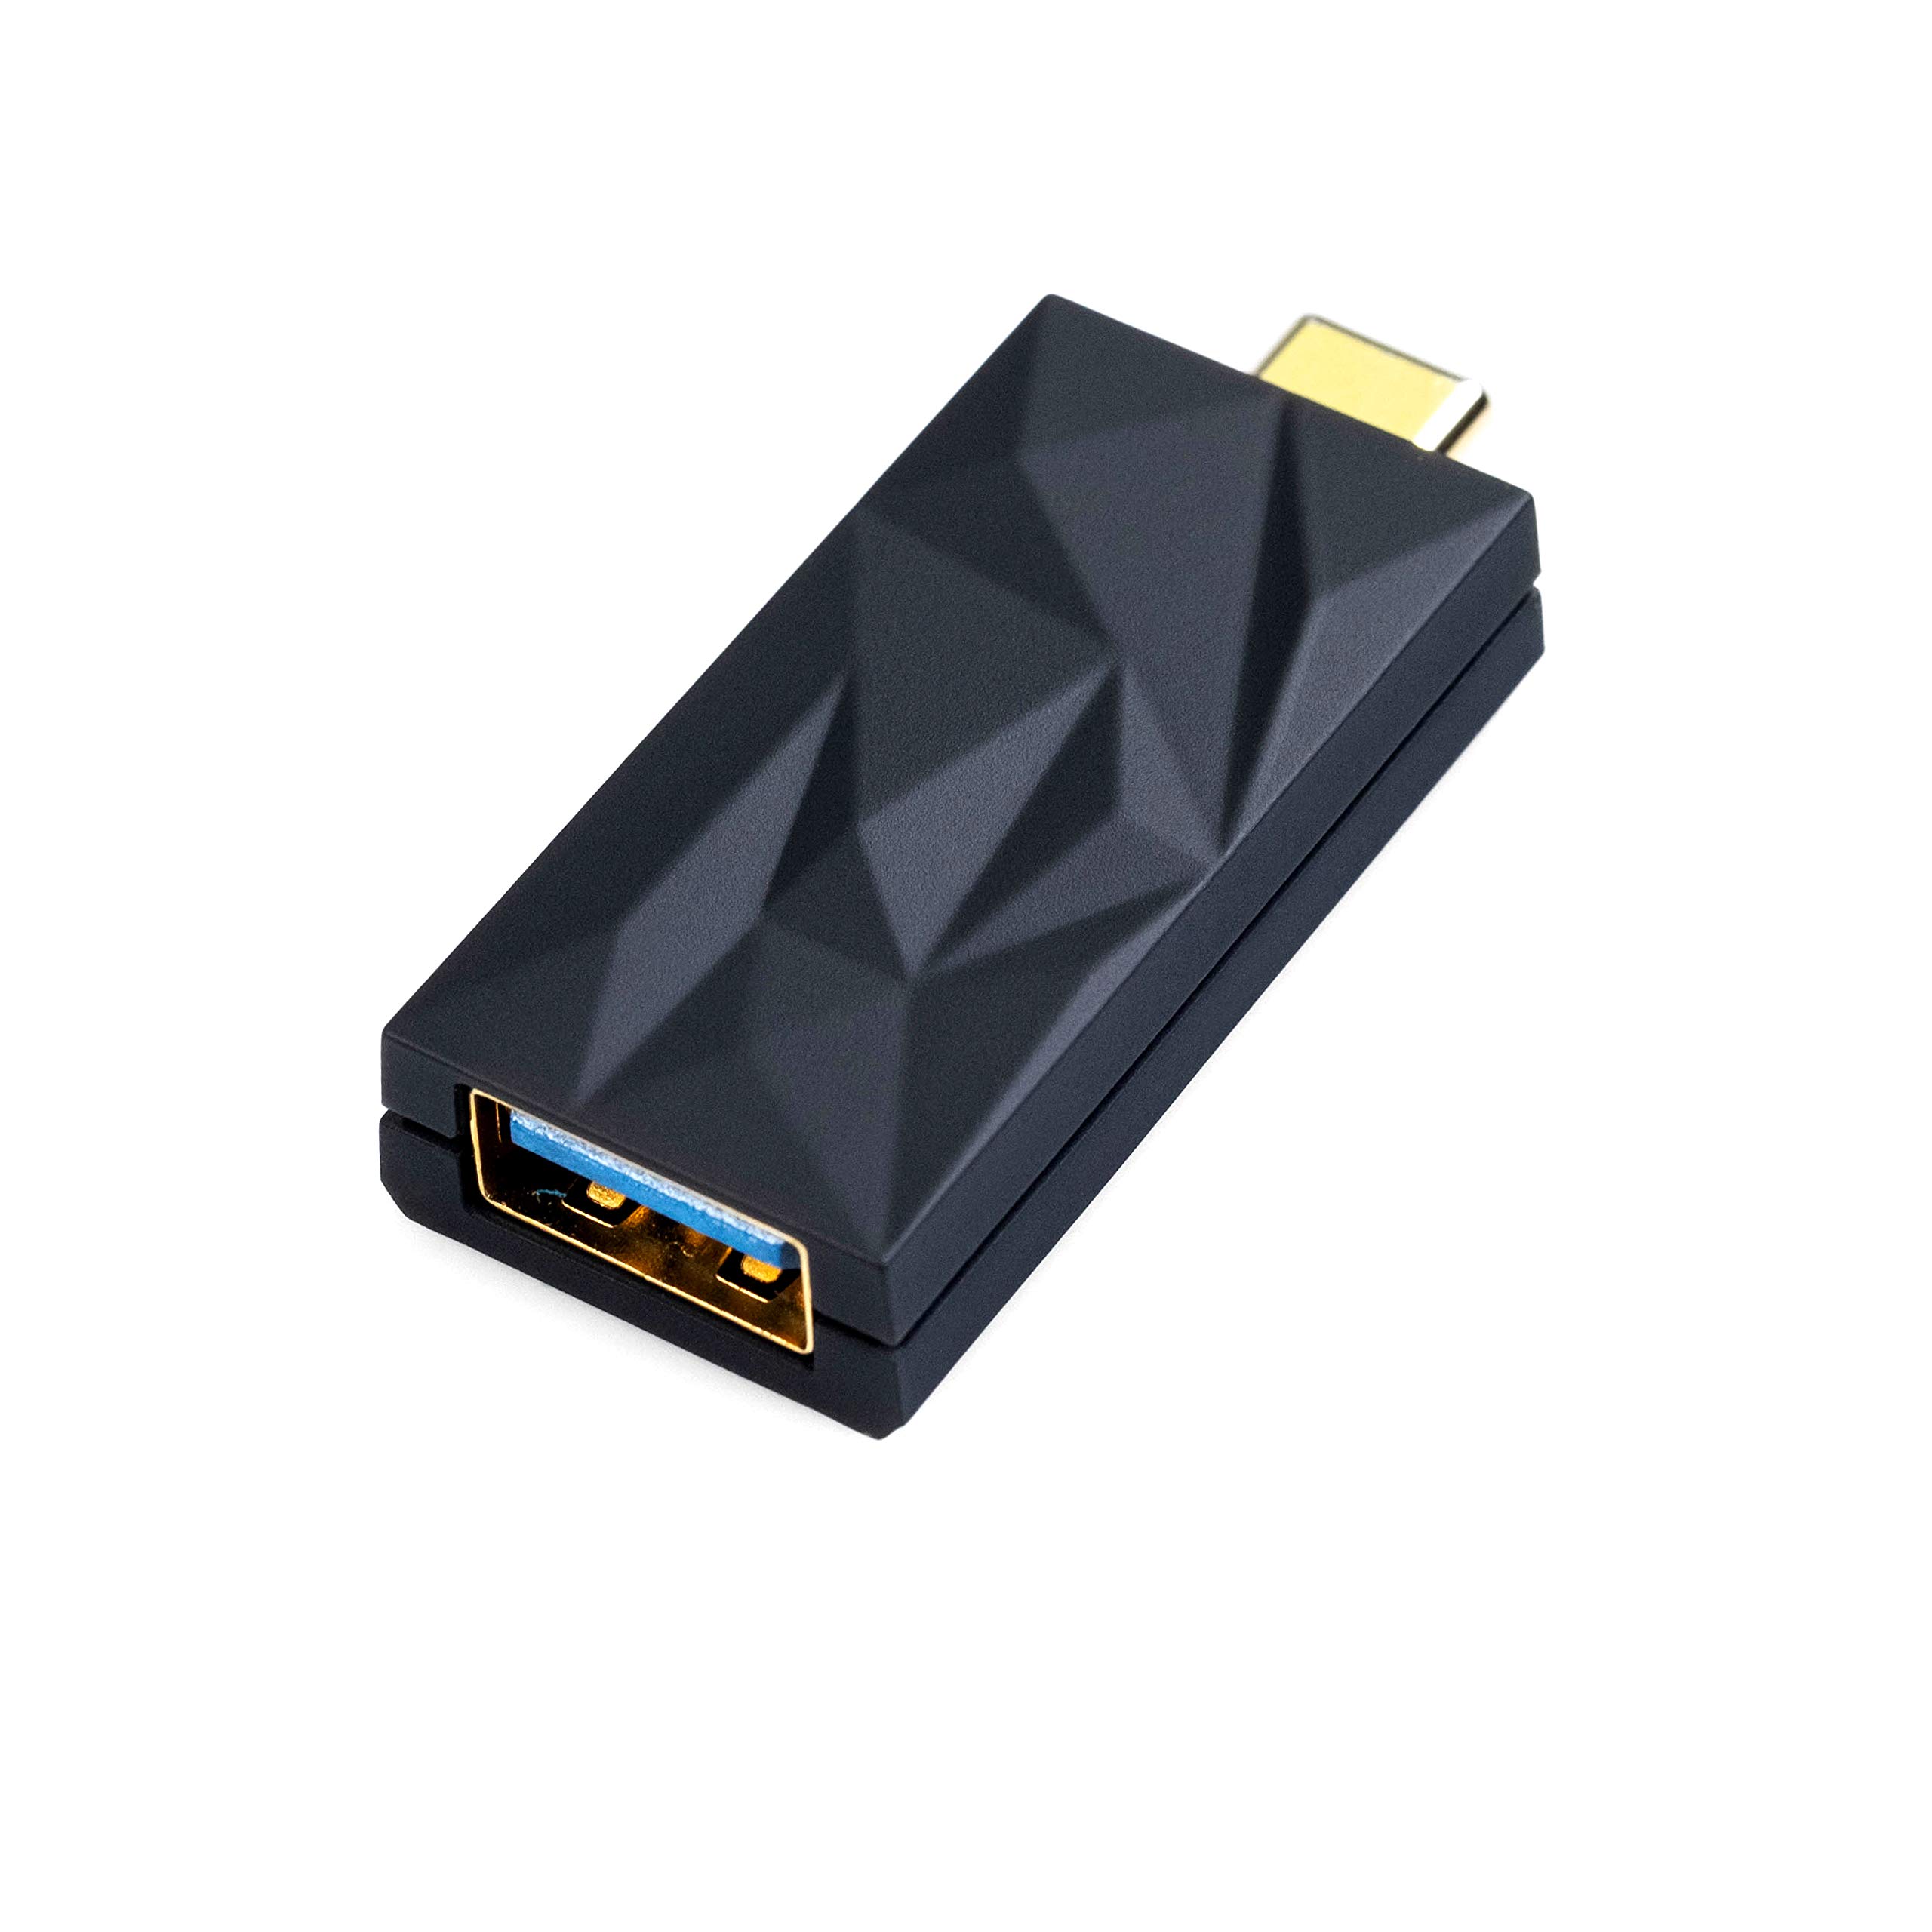 iFi iSilencer+ USB Audio Noise Eliminator / Suppressor / Adapter - System Upgrader (C  A)